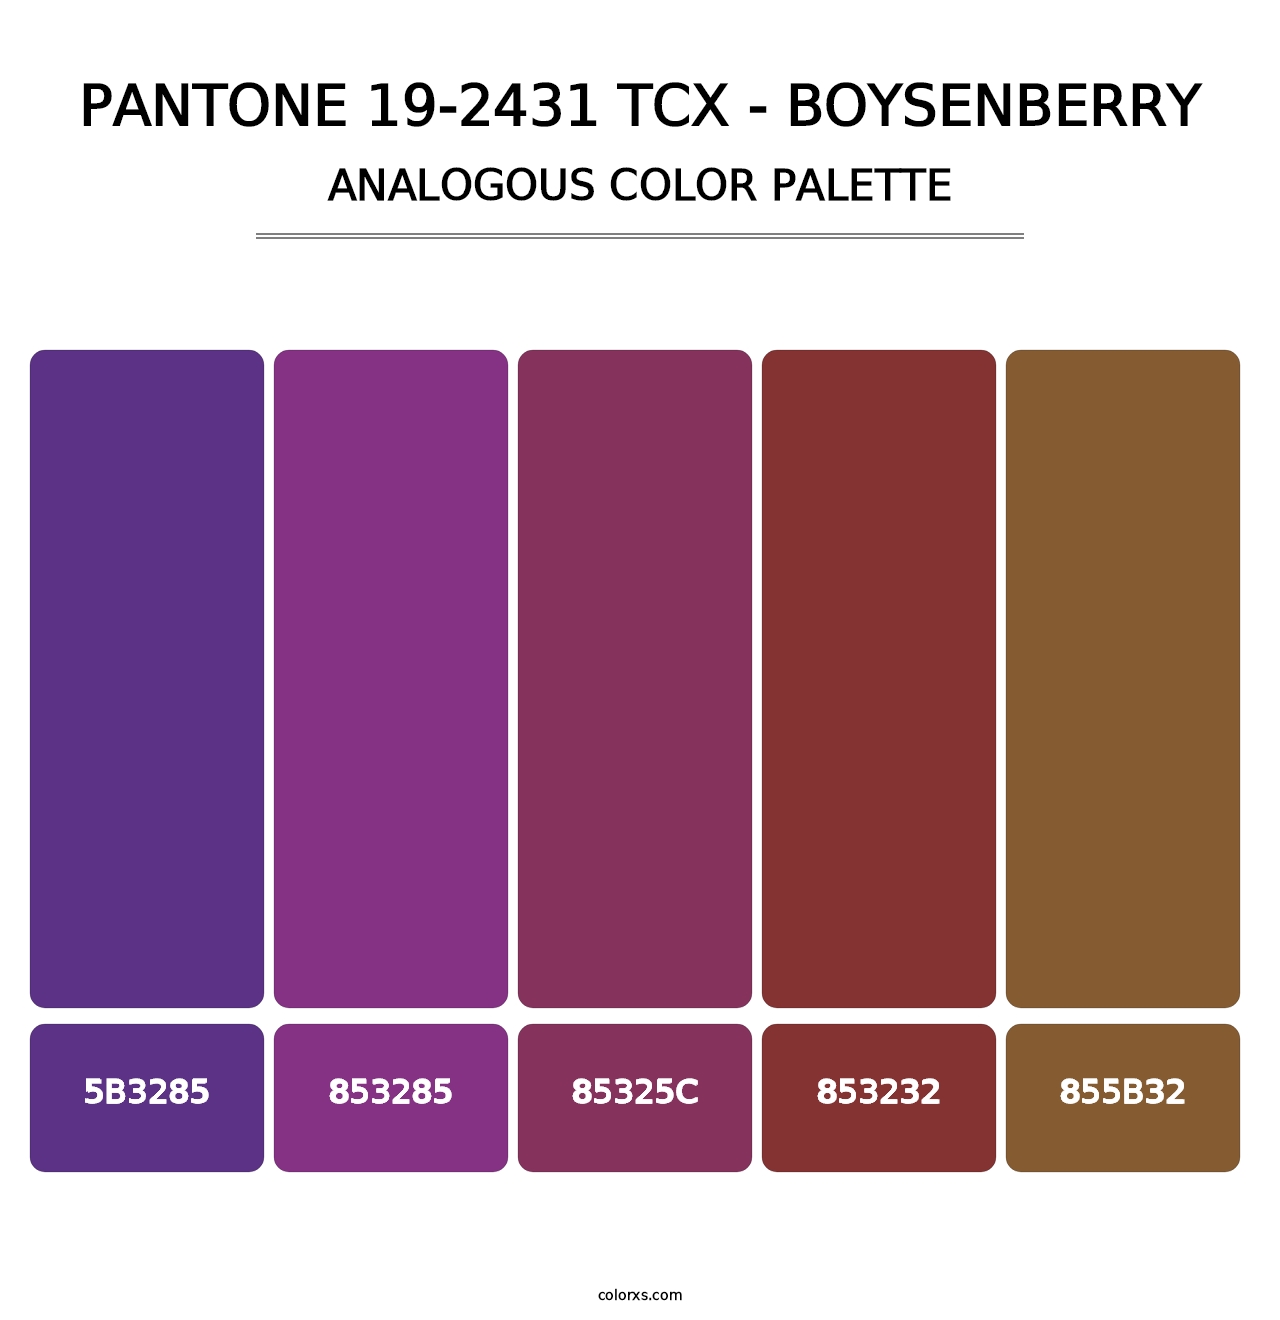 PANTONE 19-2431 TCX - Boysenberry - Analogous Color Palette